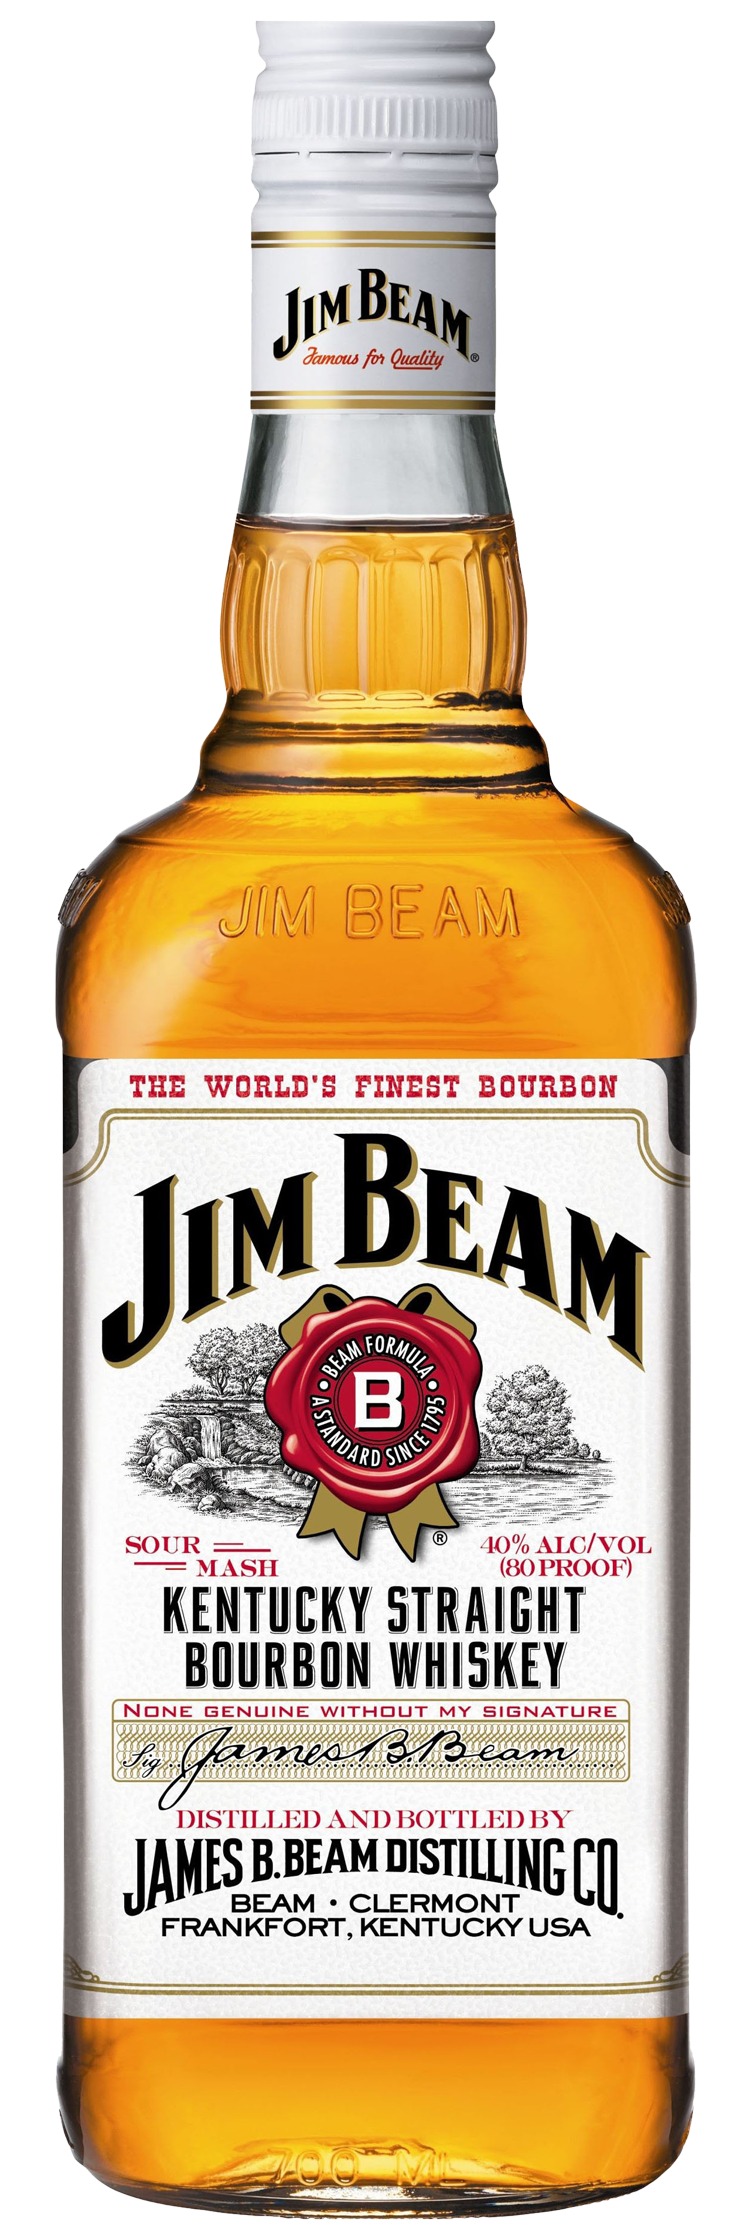 Jim Beam White Label Whiskey Bourbon Kentucky Straight